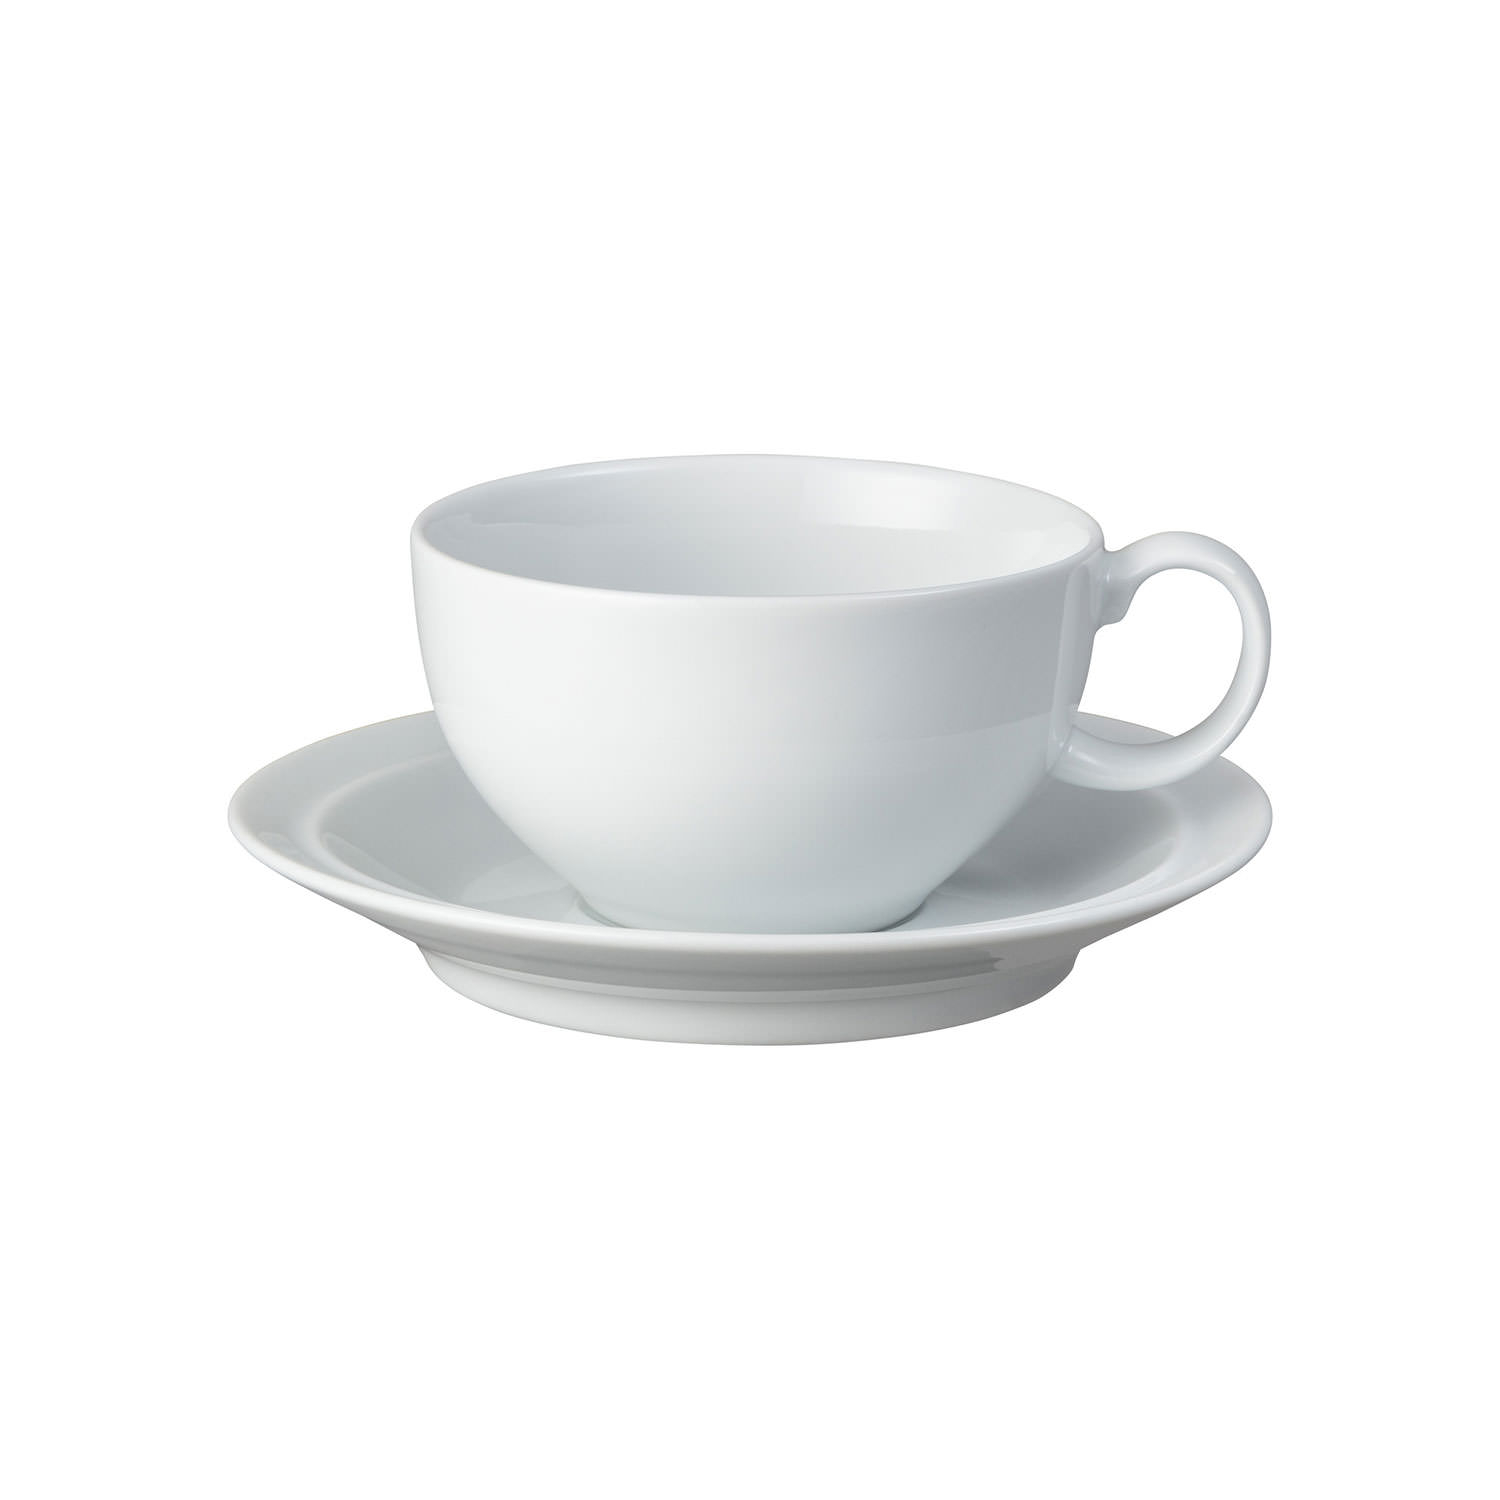 White Tea/Coffee Cup